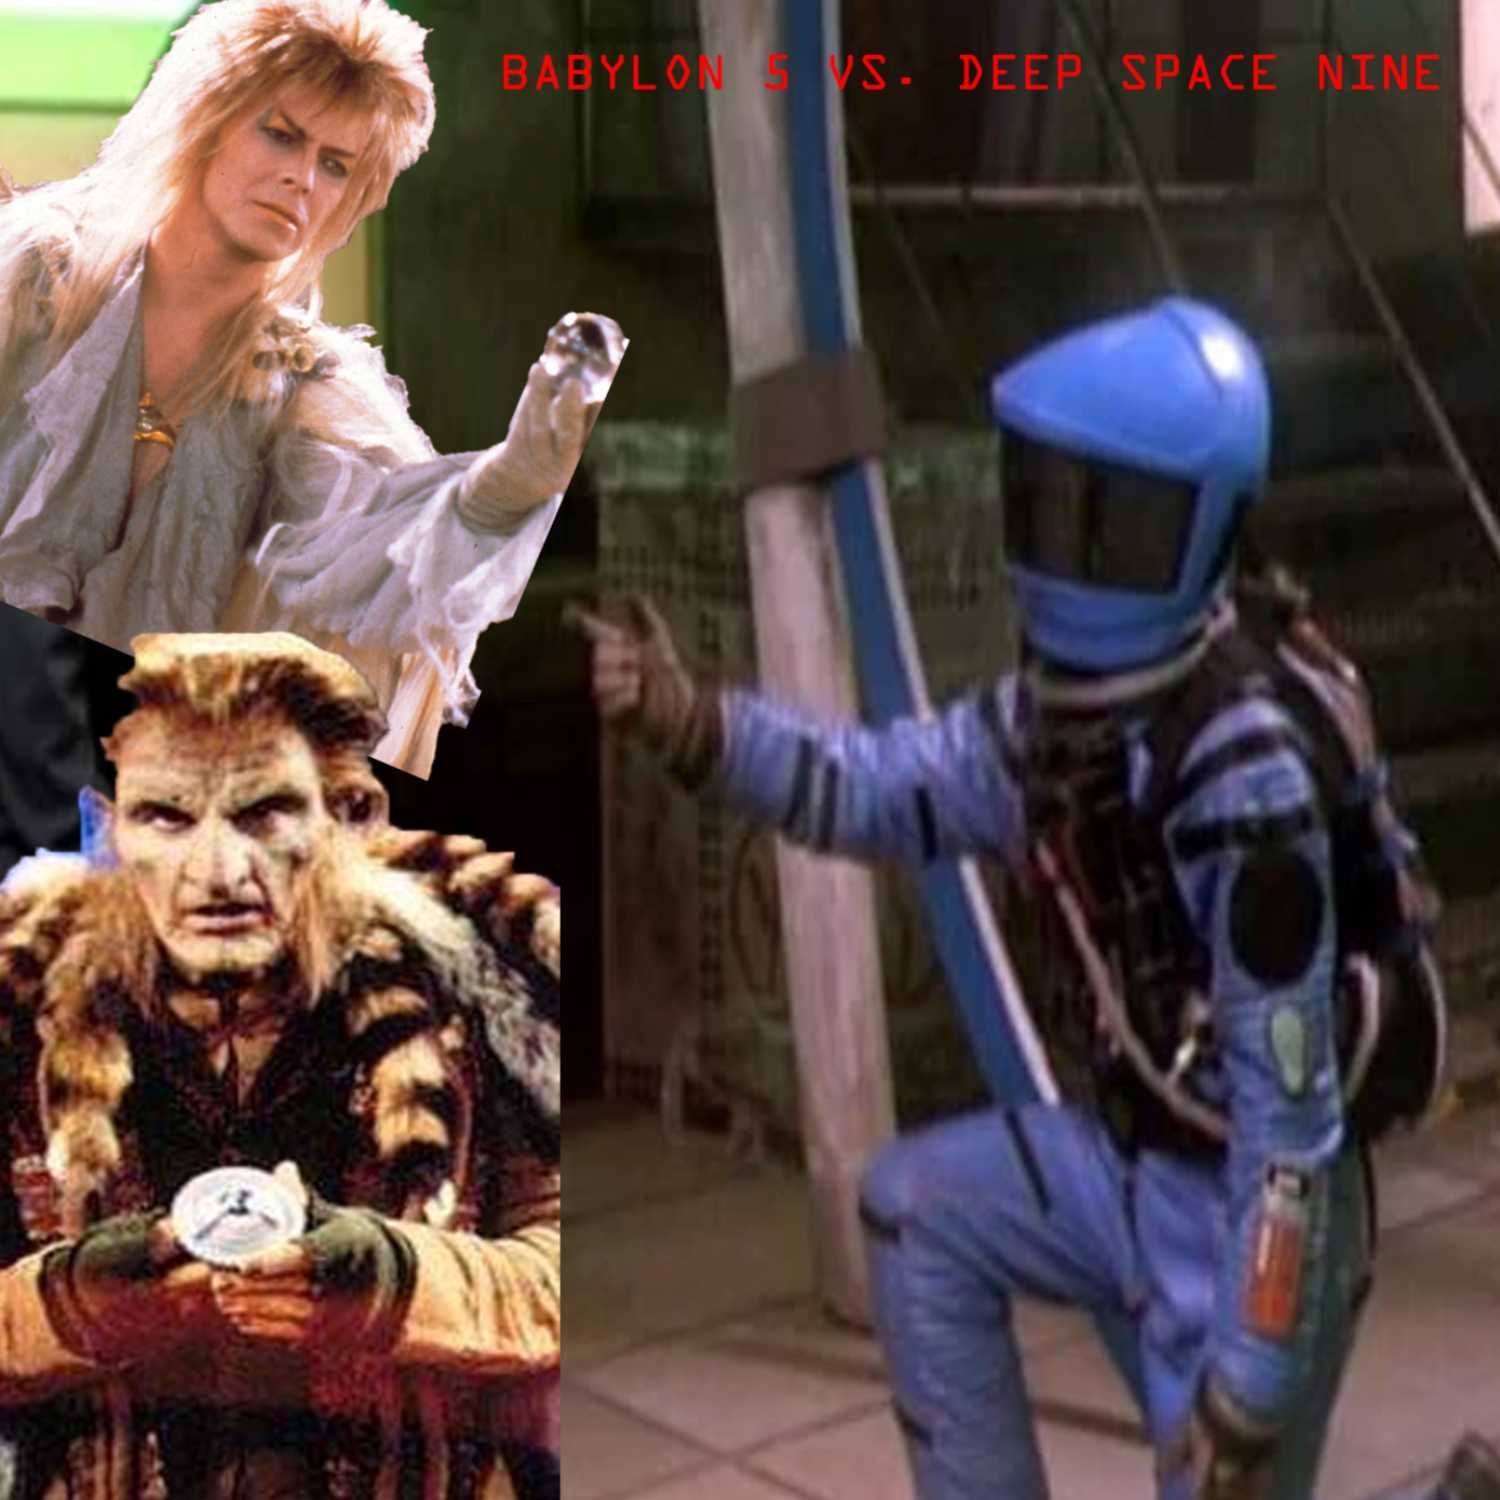 Babylon 5 vs. Deep Space Nine-